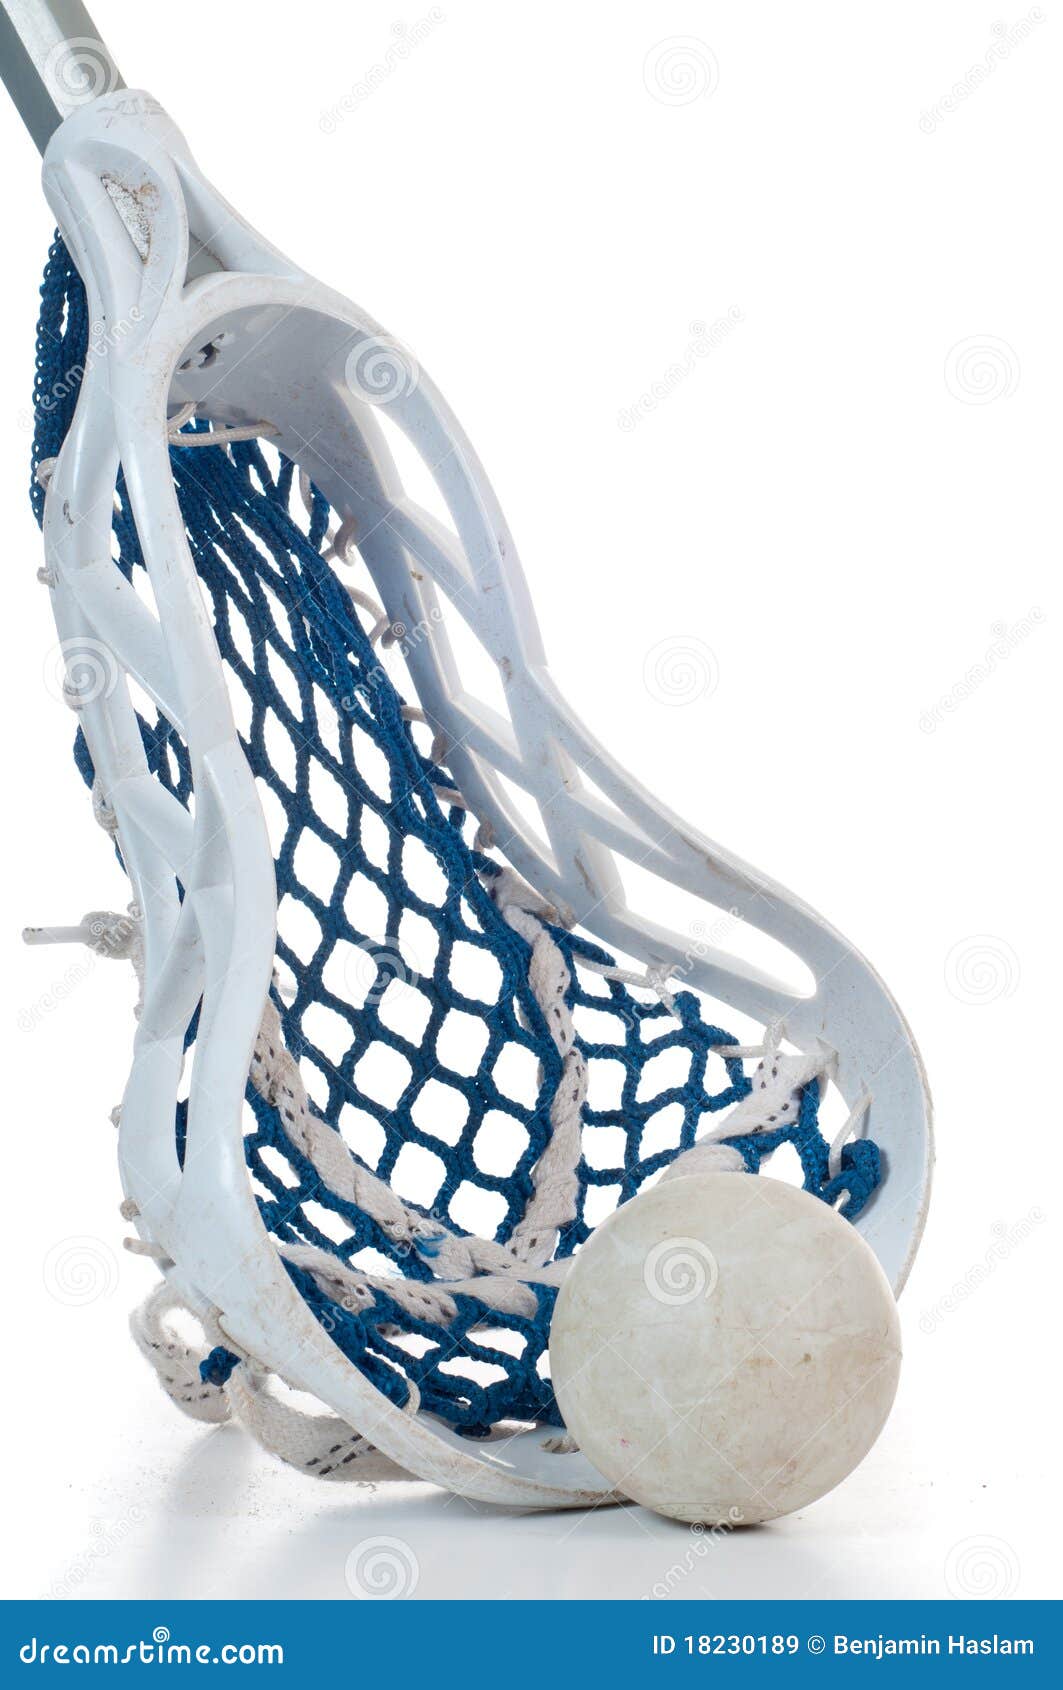 lacrosse-stick-ball-18230189.jpg